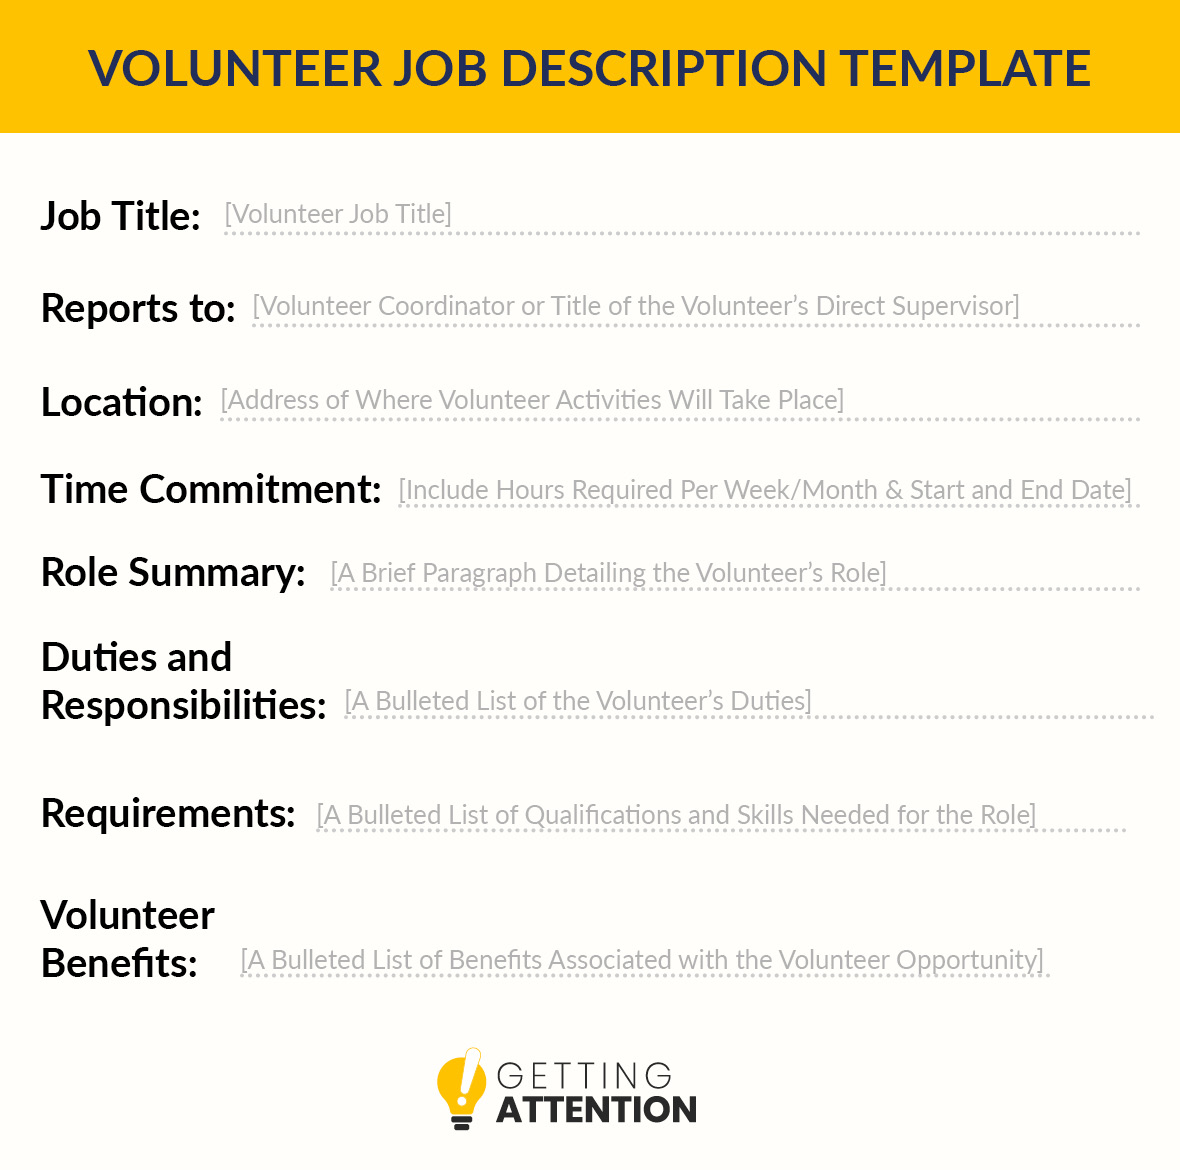 Use this volunteer job description to guide your volunteer recruitment efforts.